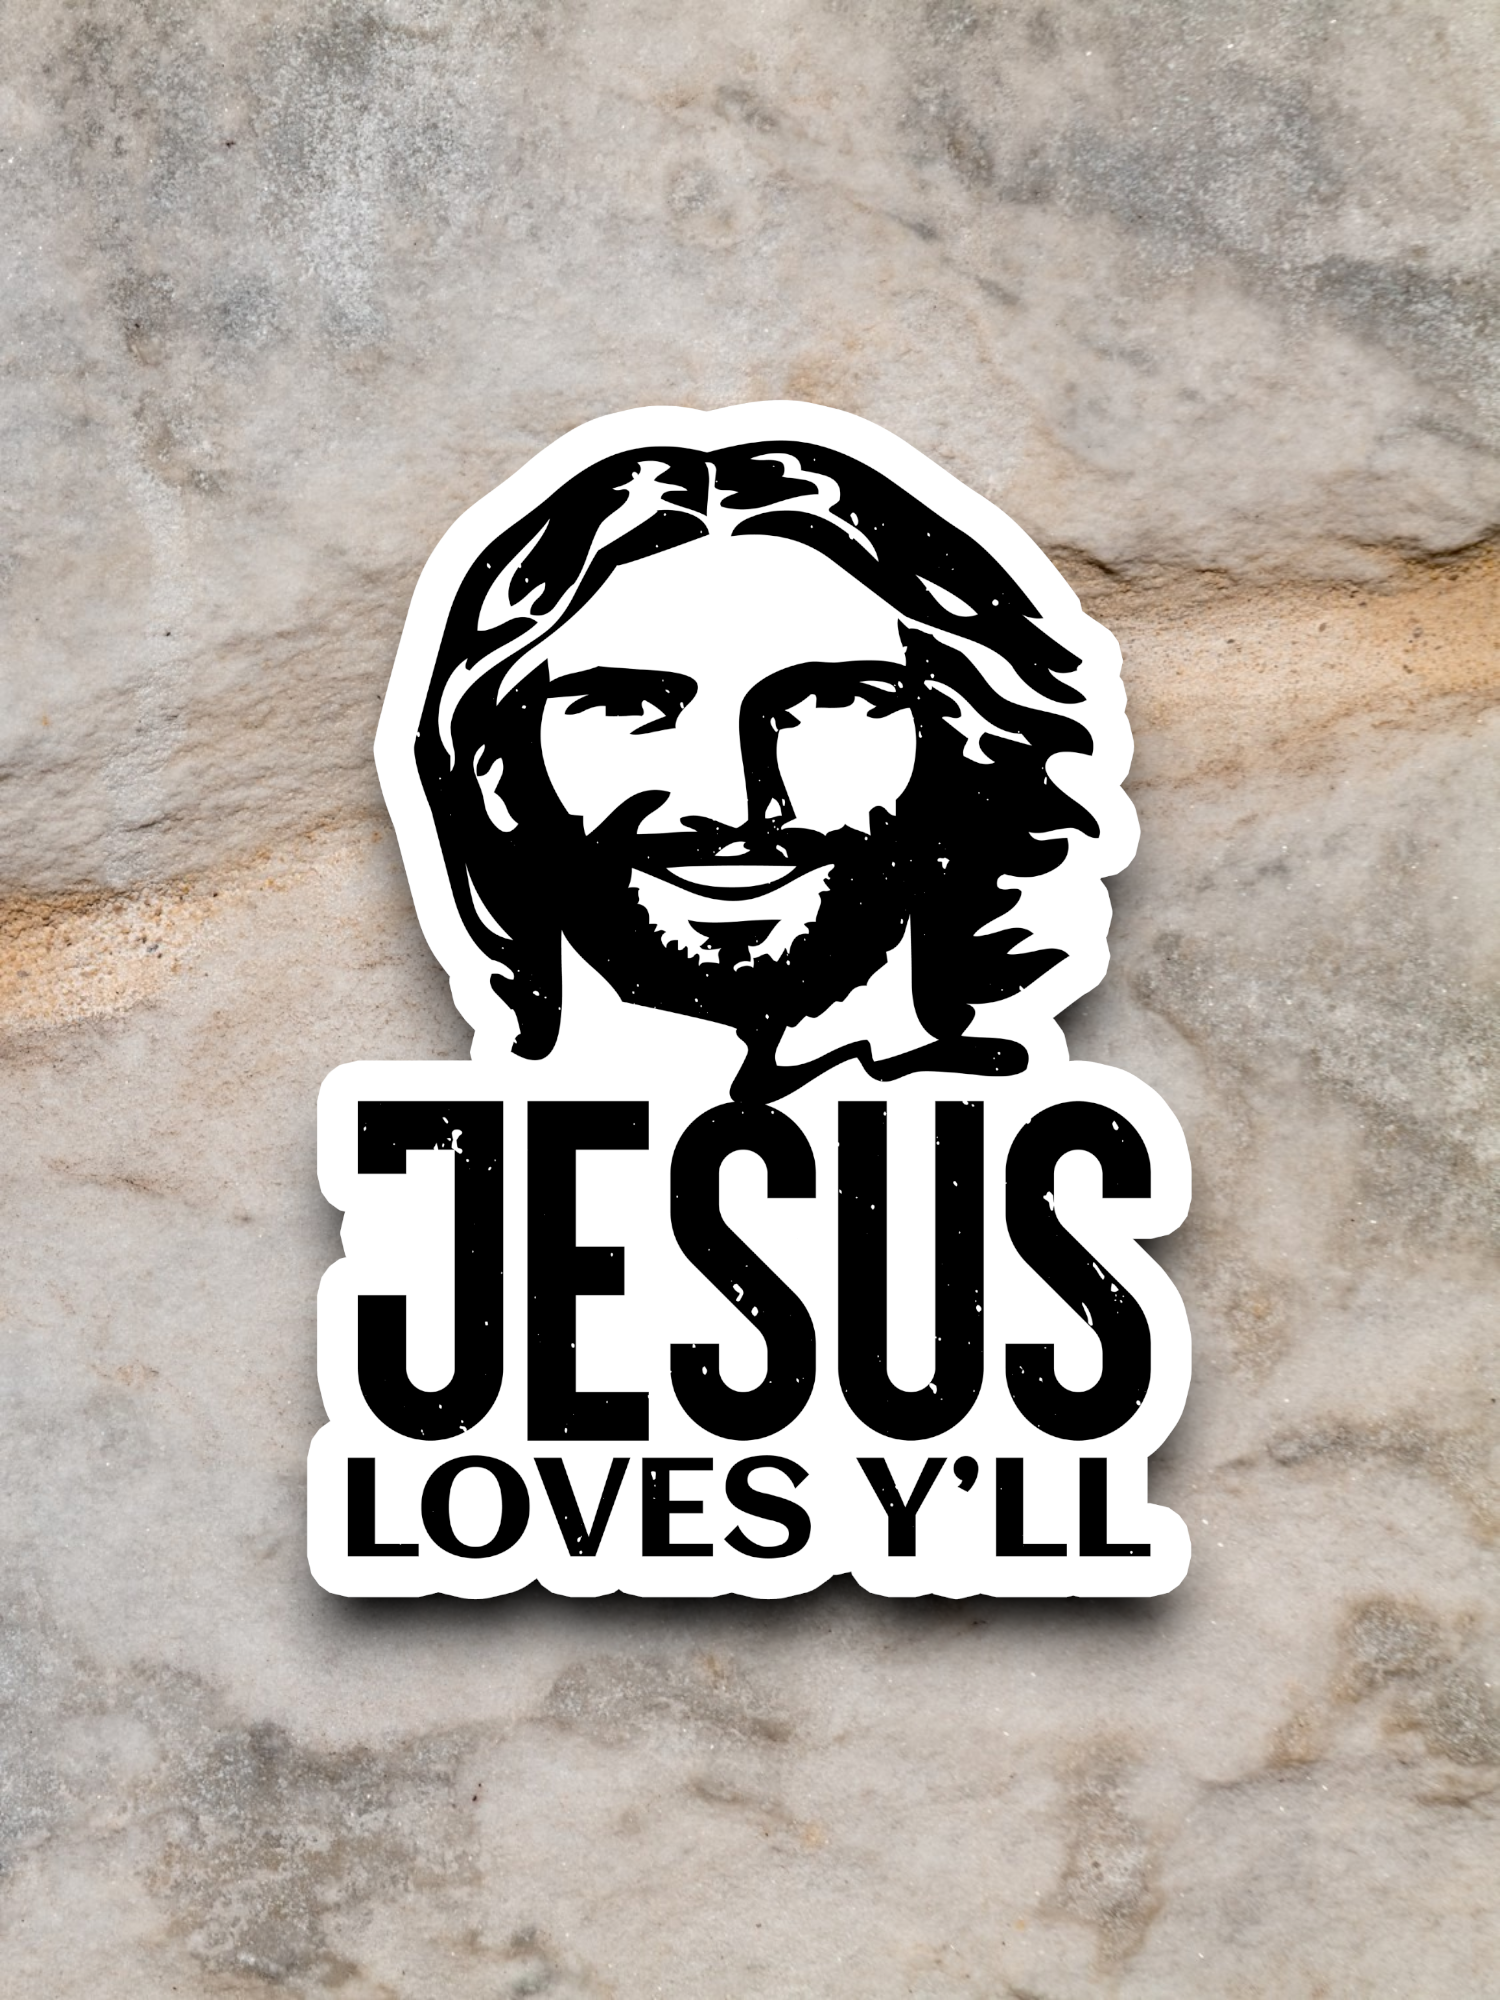 Jesus Loves Y’ll Sticker